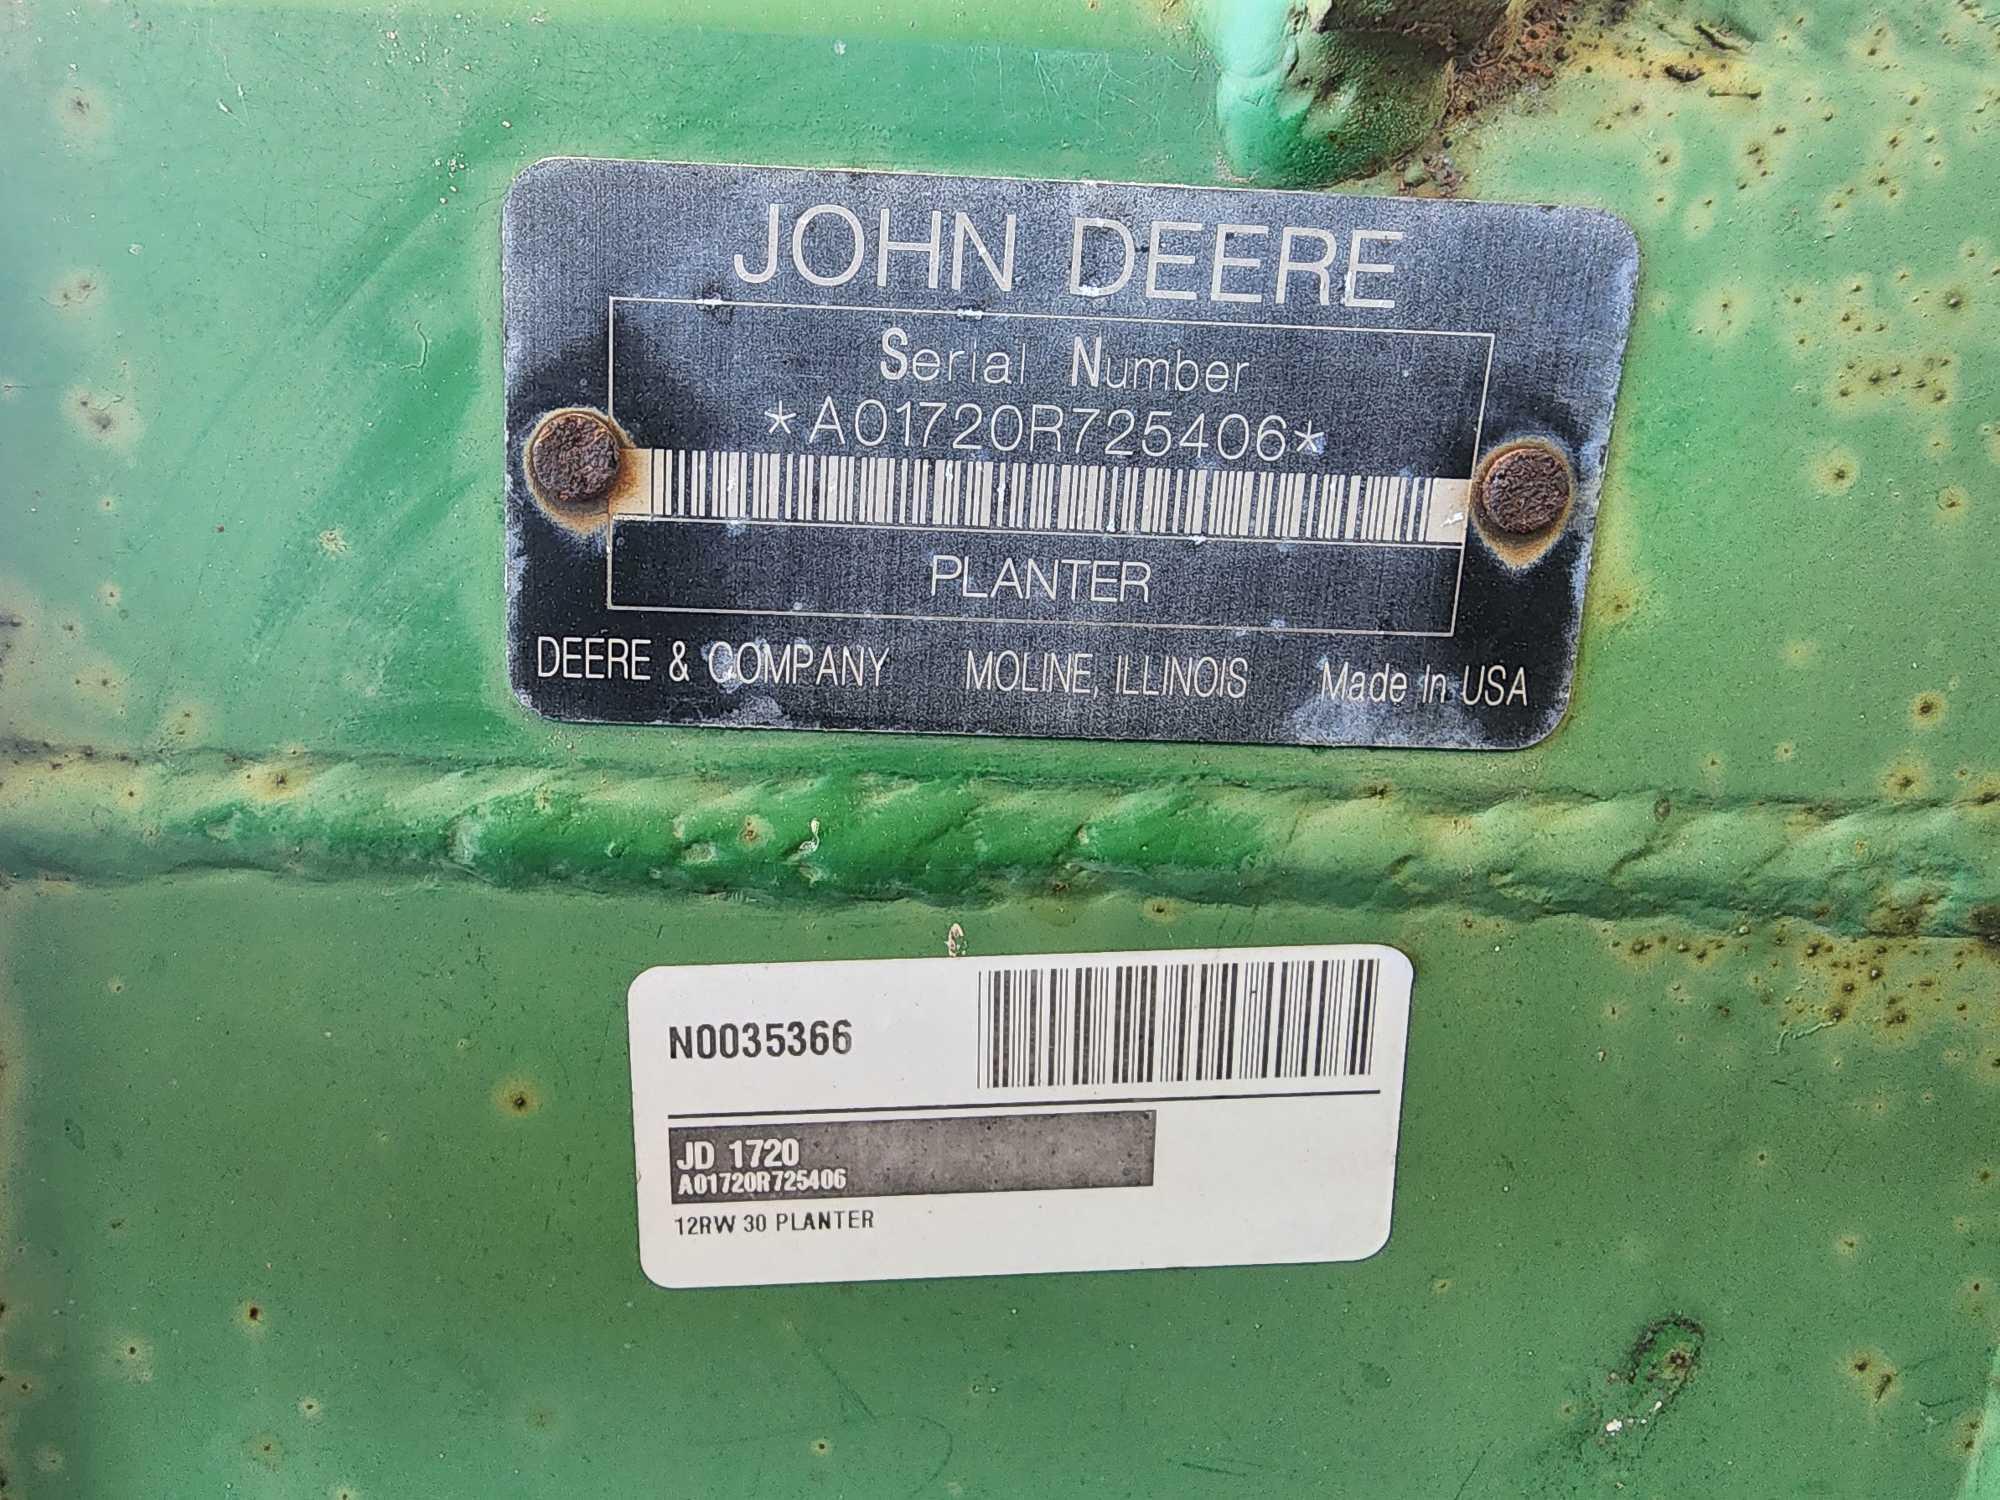 John Deere 1720 MaxEmerge XP 12-Row Planter...Srl #A01720R725406 w/JD Computer Monitor